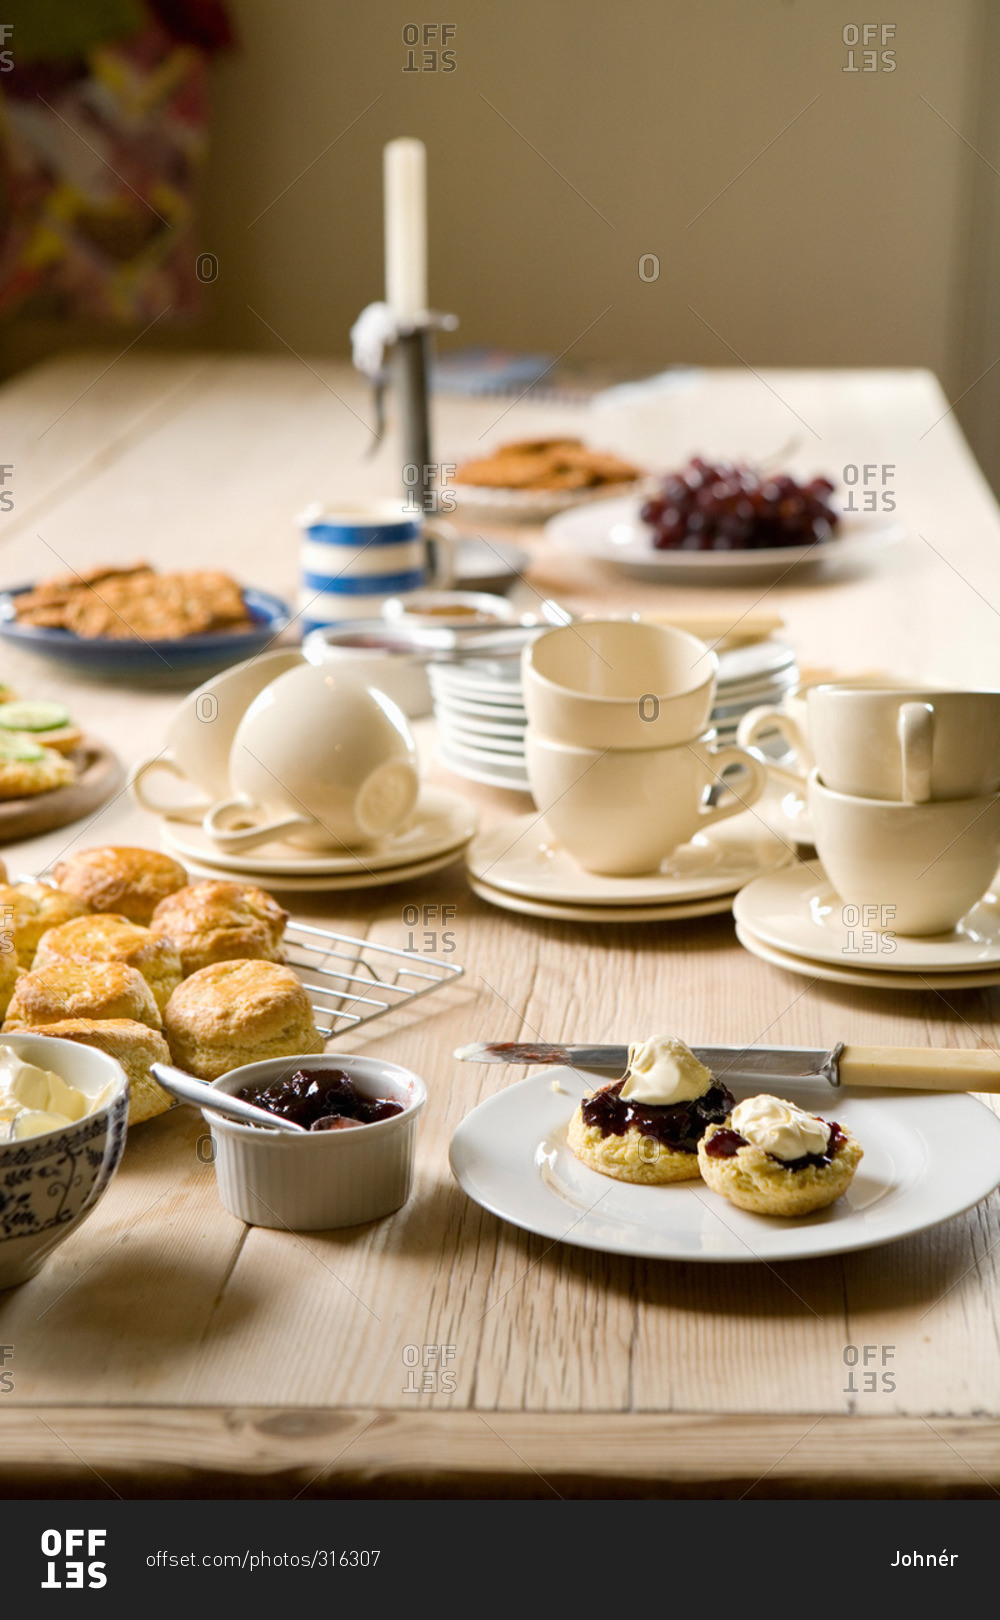 Afternoon tea table setting, England